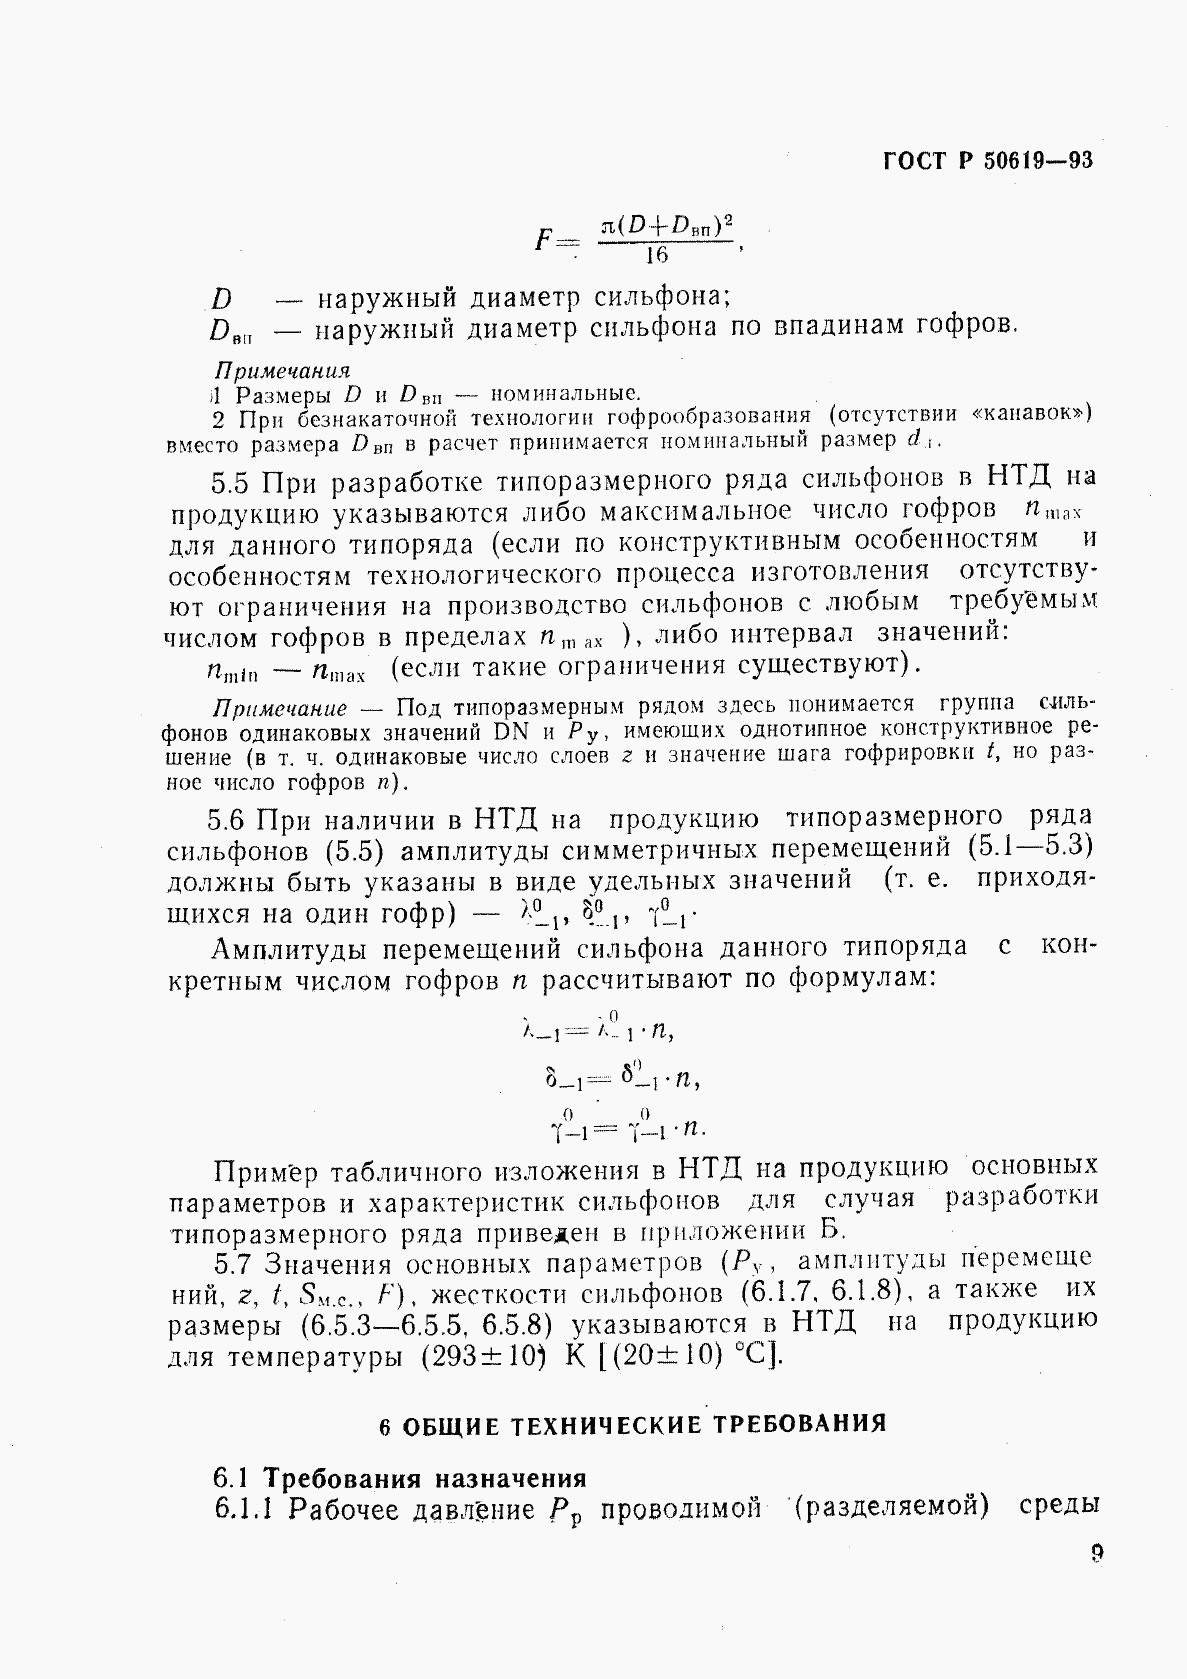 ГОСТ Р 50619-93, страница 12